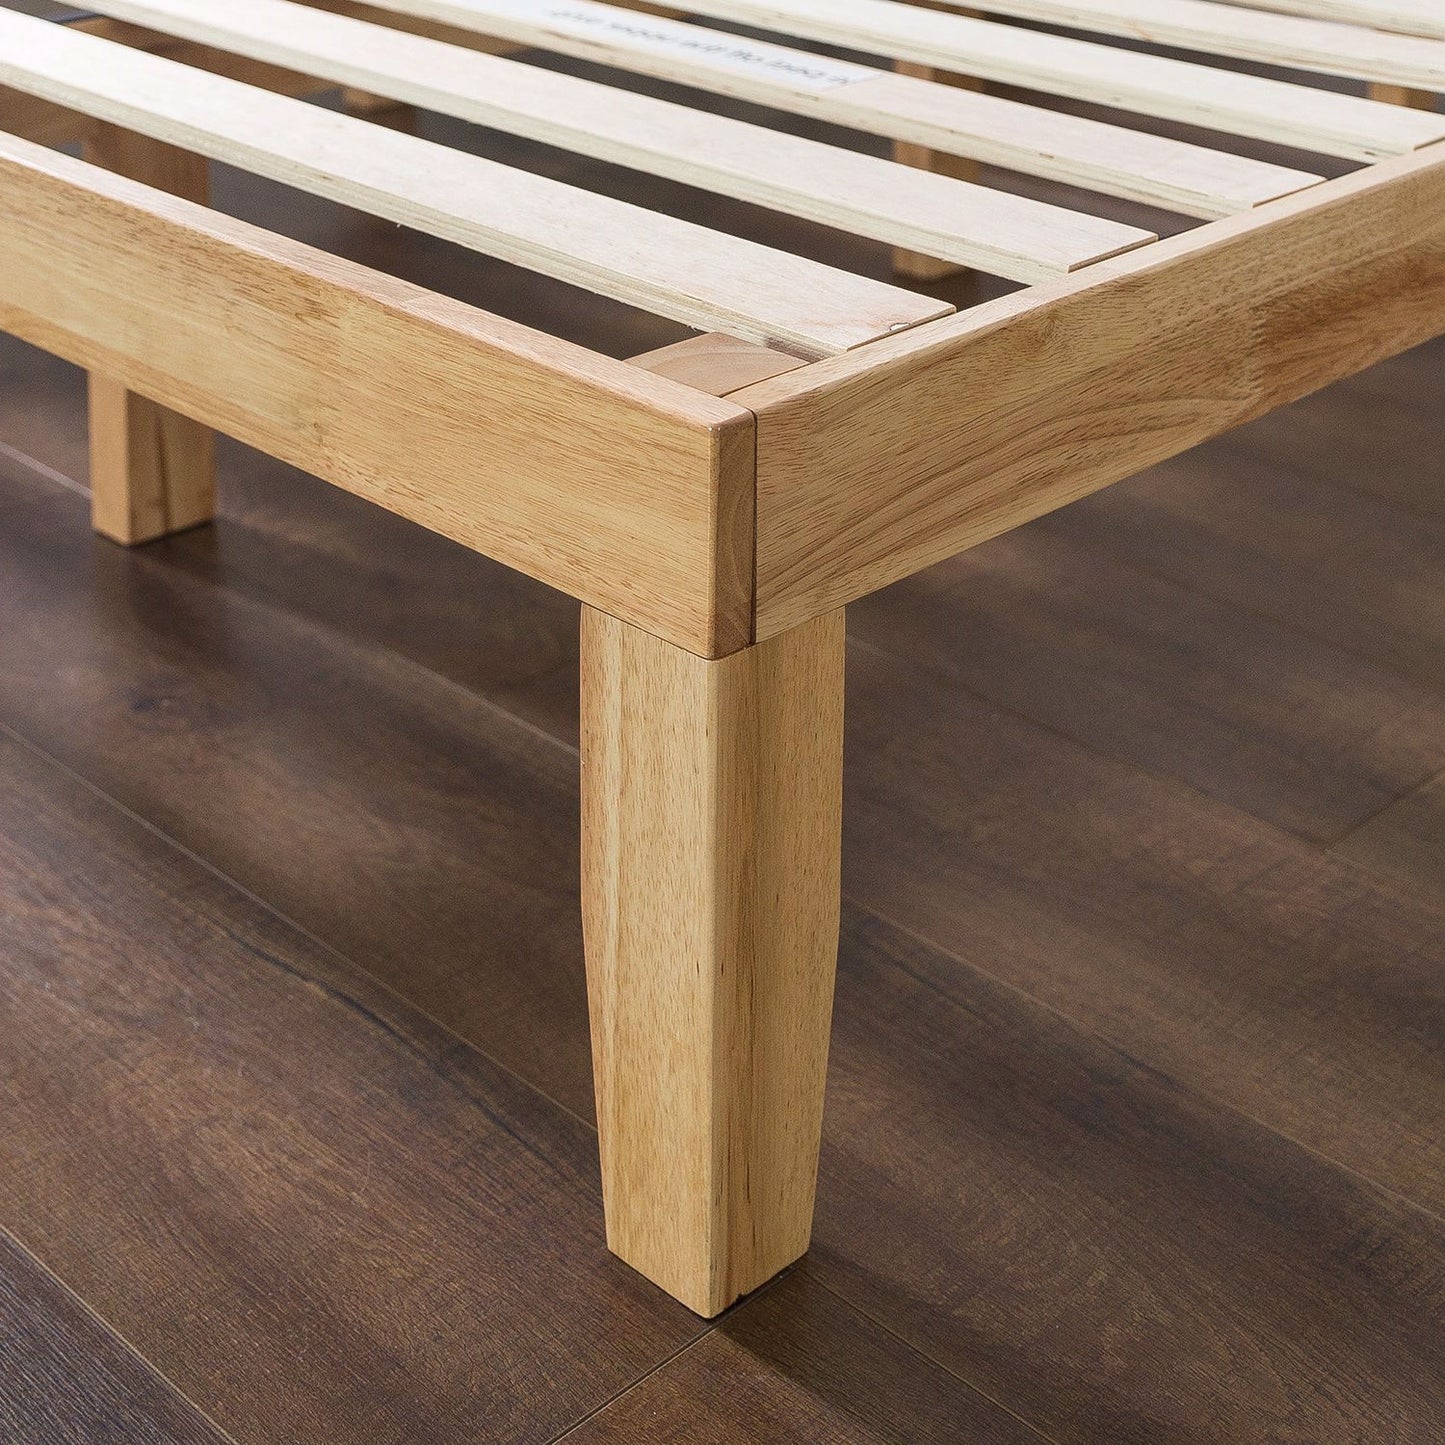 Full size Solid Wood Platform Bed Frame in Natural Finish